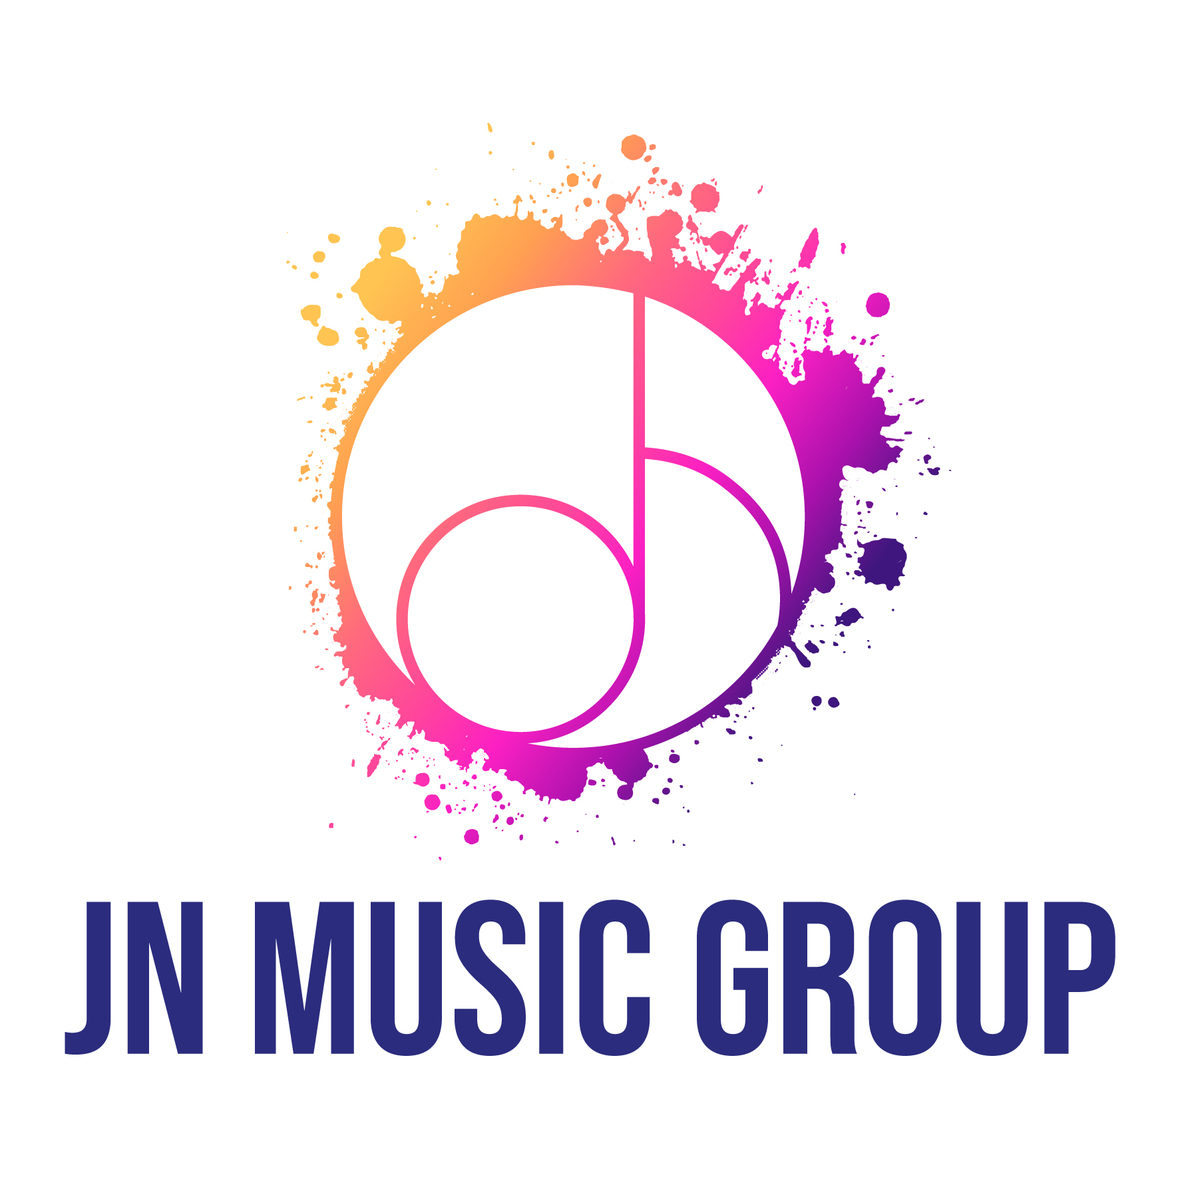 JN MUSIC GROUP VECTOR-01